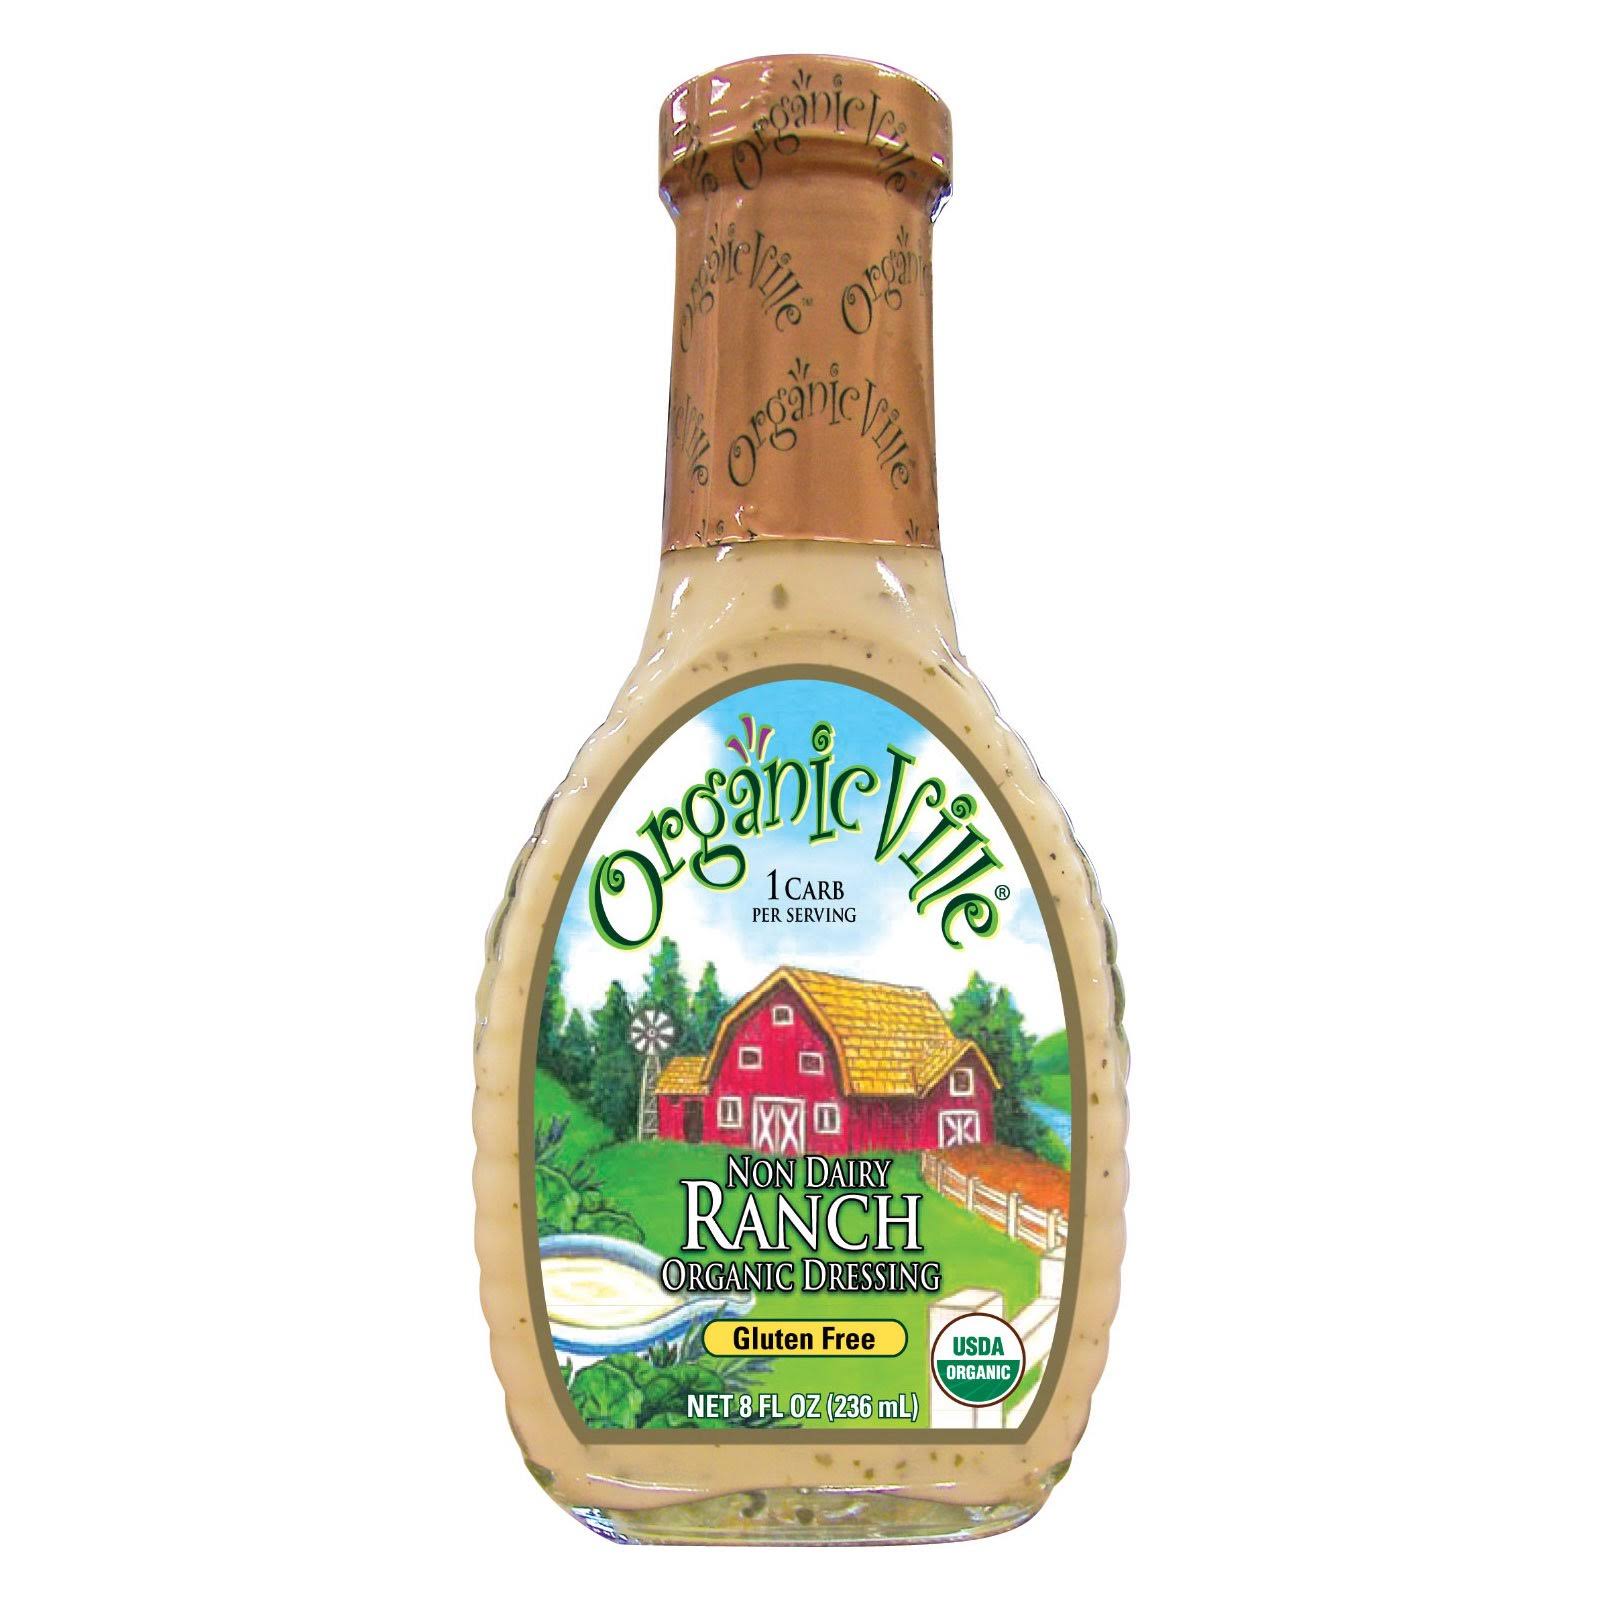 OrganicVille Organic Dressing, Non-Dairy Ranch - 8 fl oz bottle